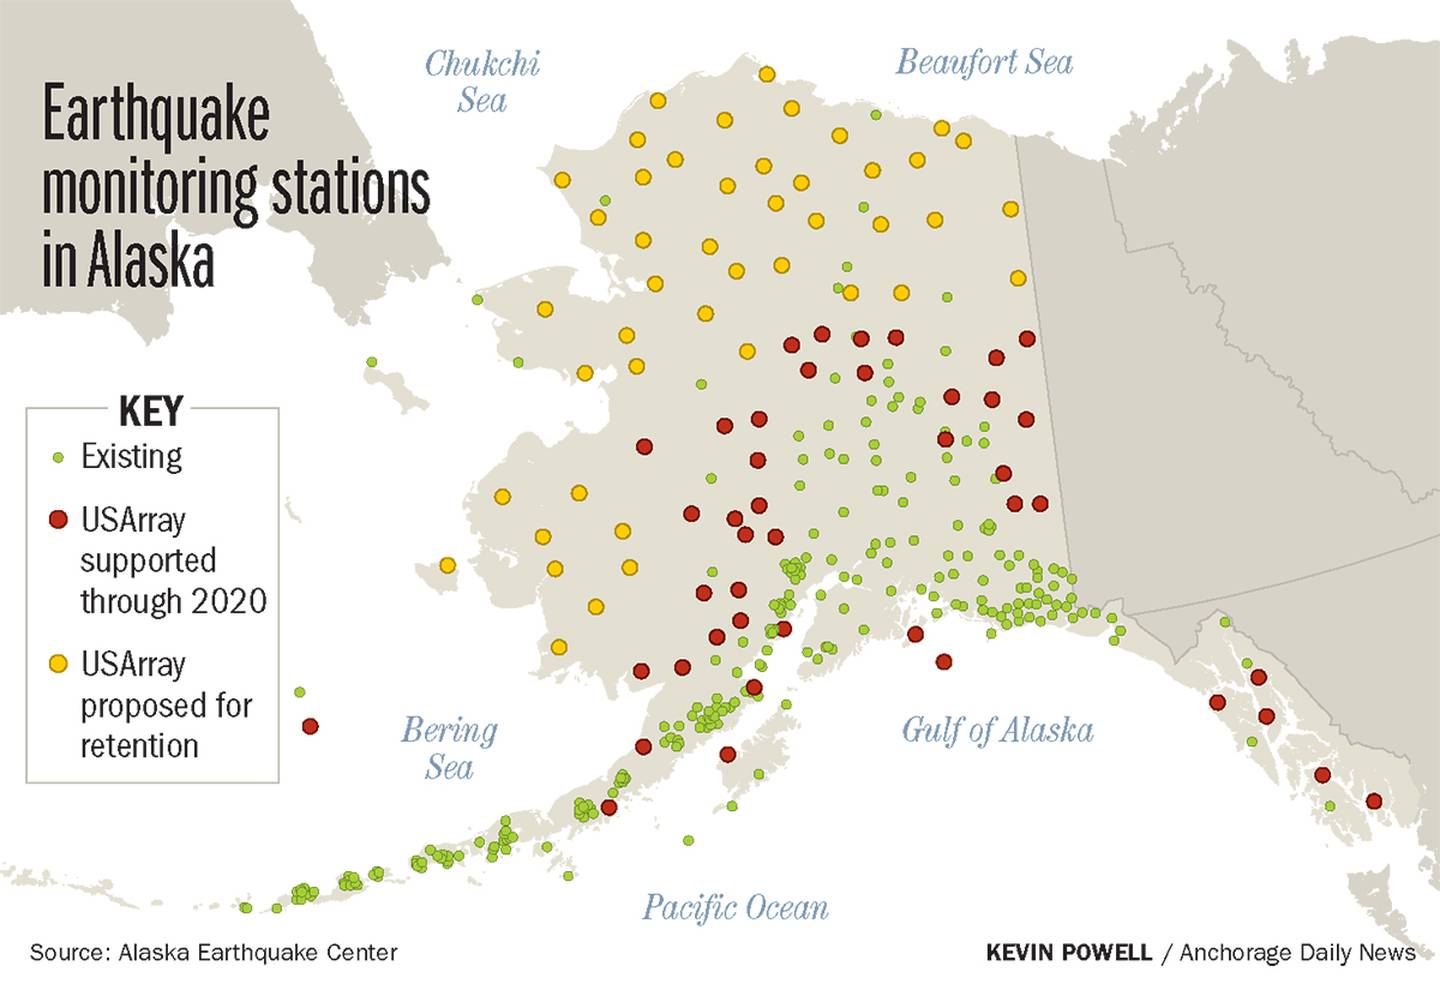 Earthquake monitoring stations in Alaska, USArray, seismic monitors